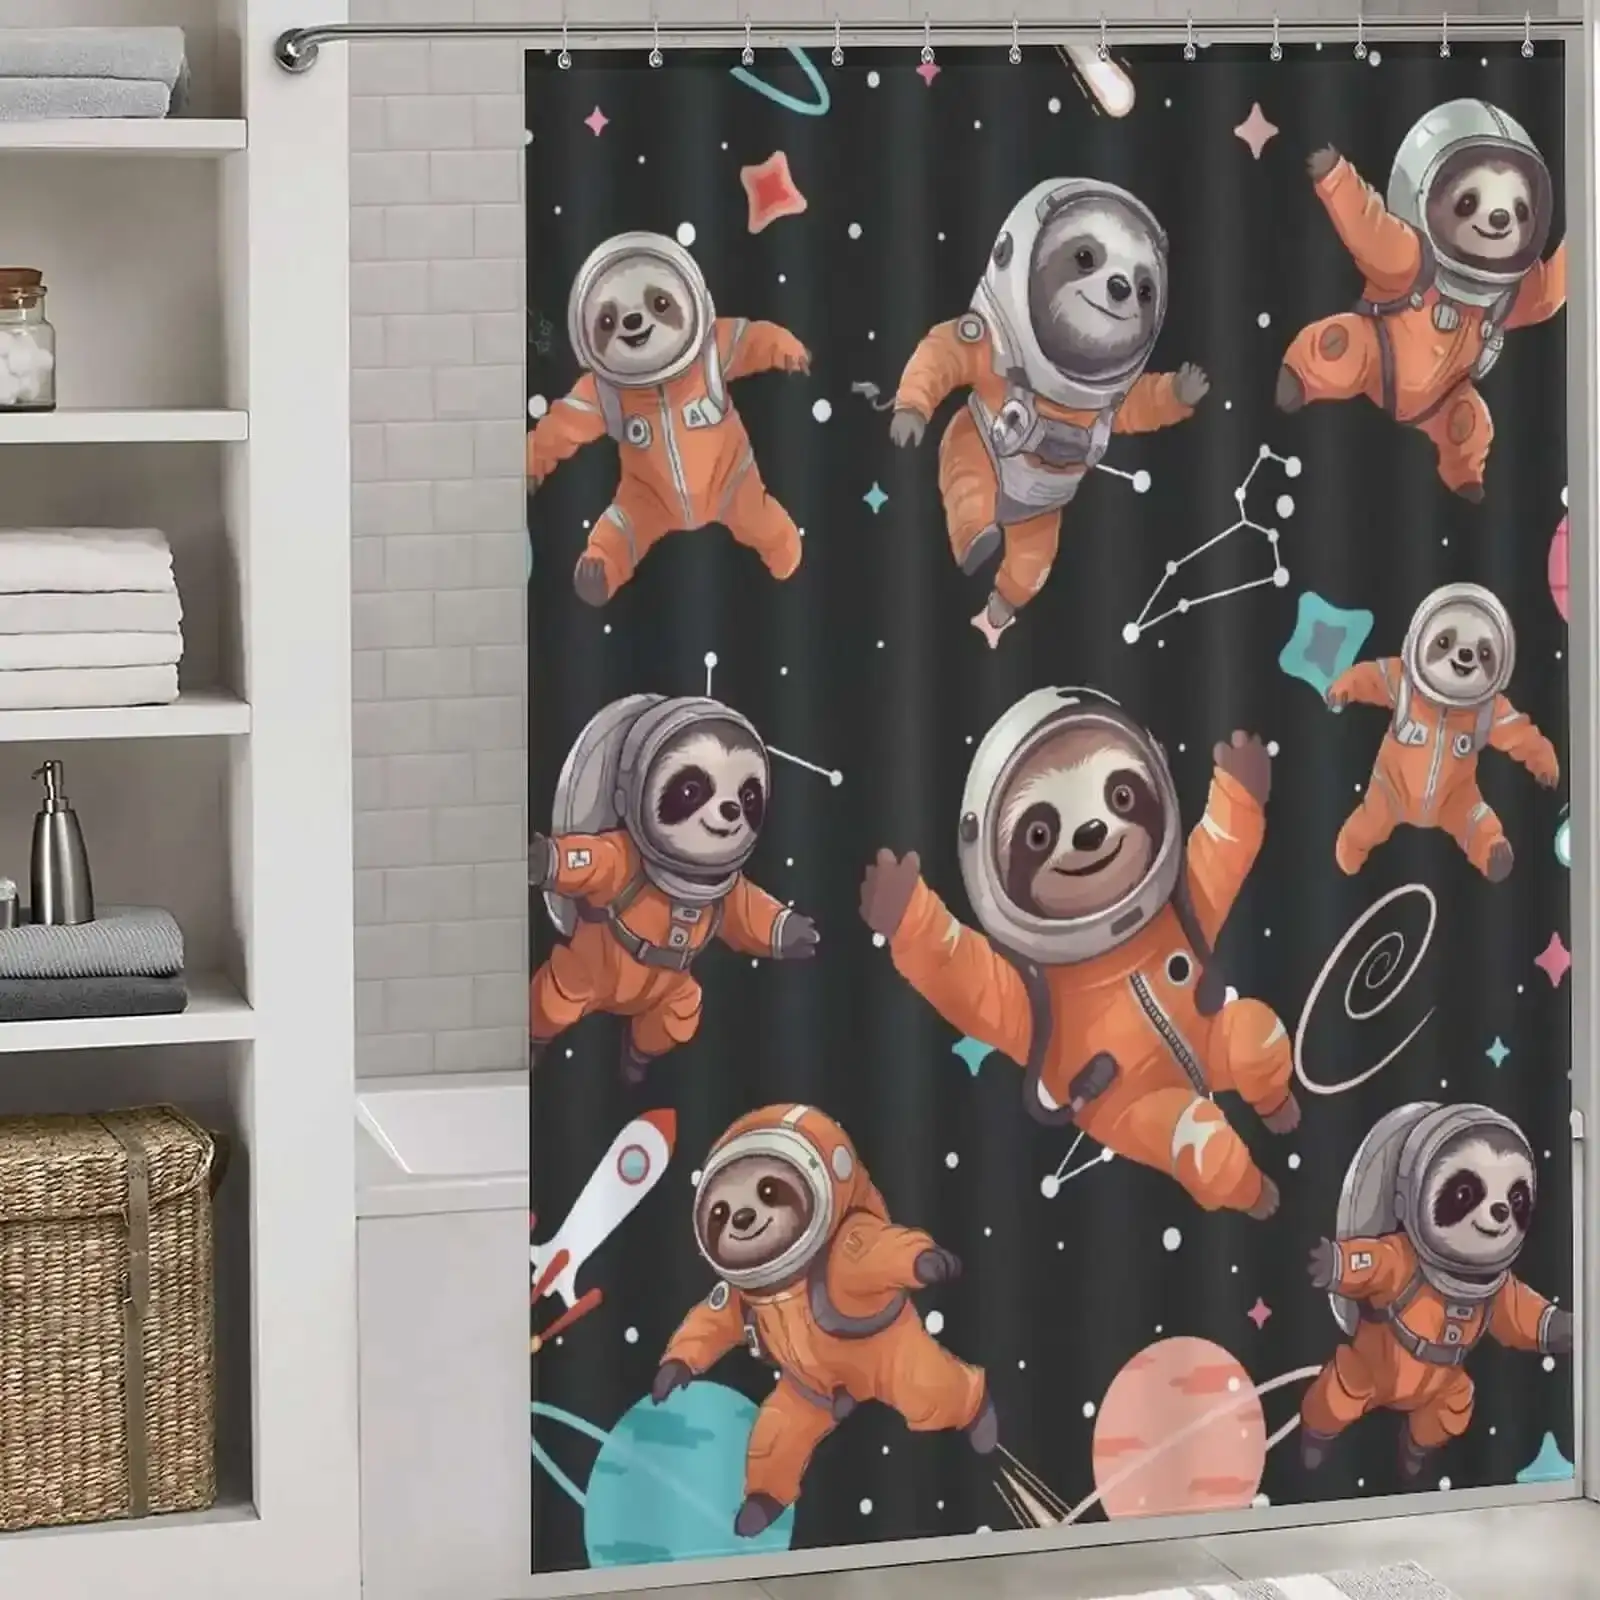 Sloth shower curtain for white bathroom